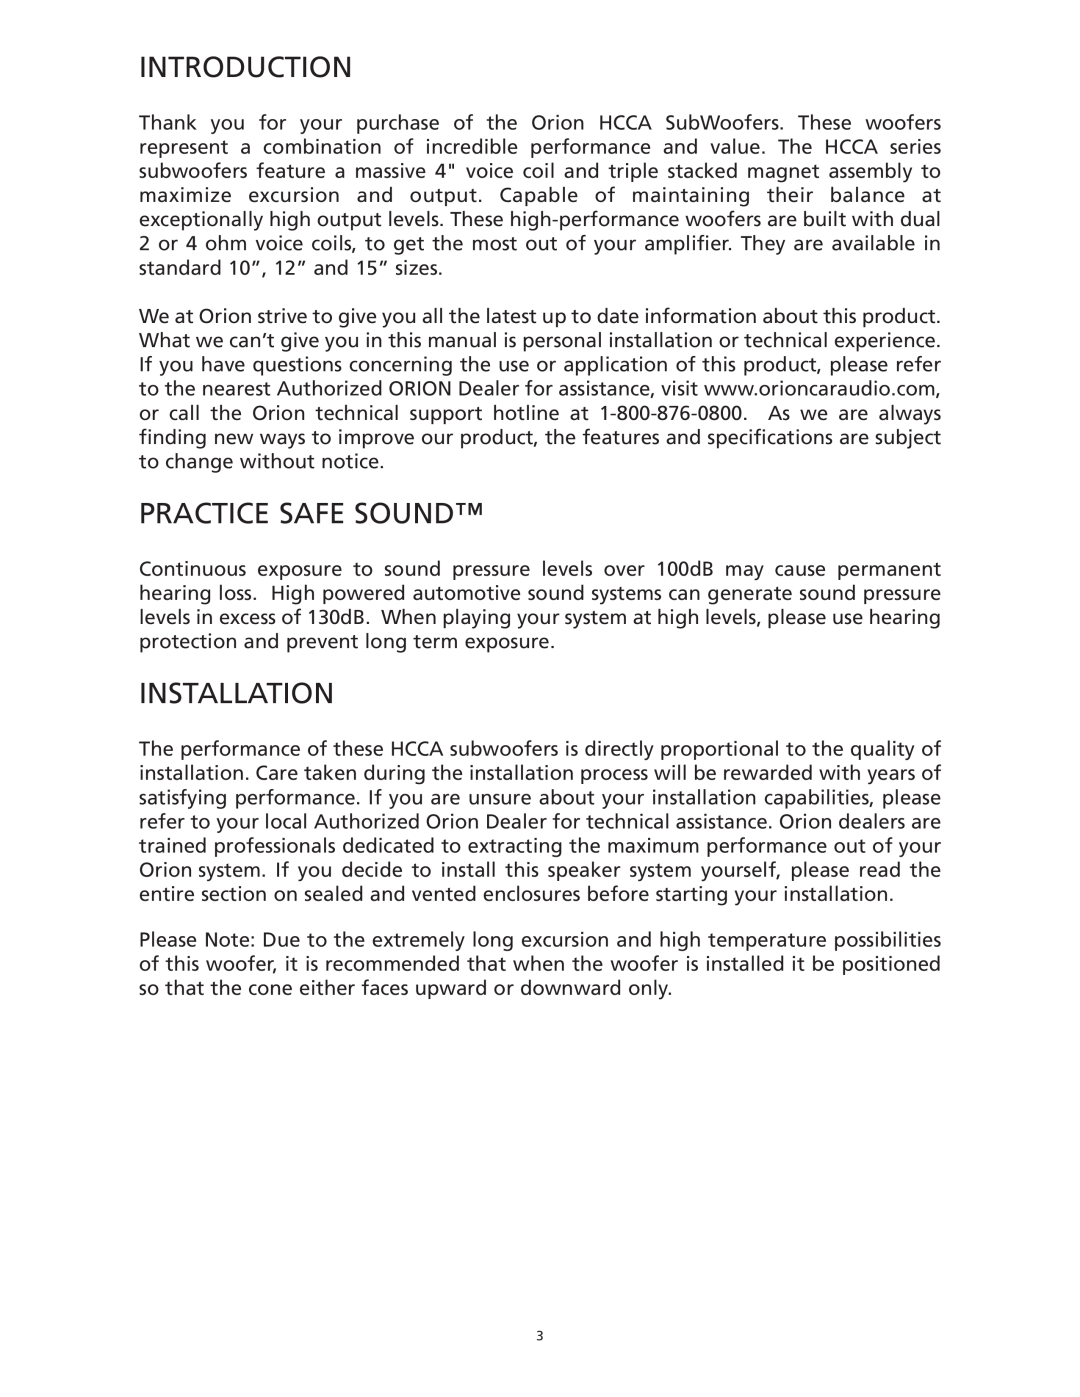 Orion Car Audio HCCA 10.4, HCCA 10.2, HCCA 15.2, HCCA 12.2, HCCA 12.04 manual Introduction, Practice Safe Sound, Installation 